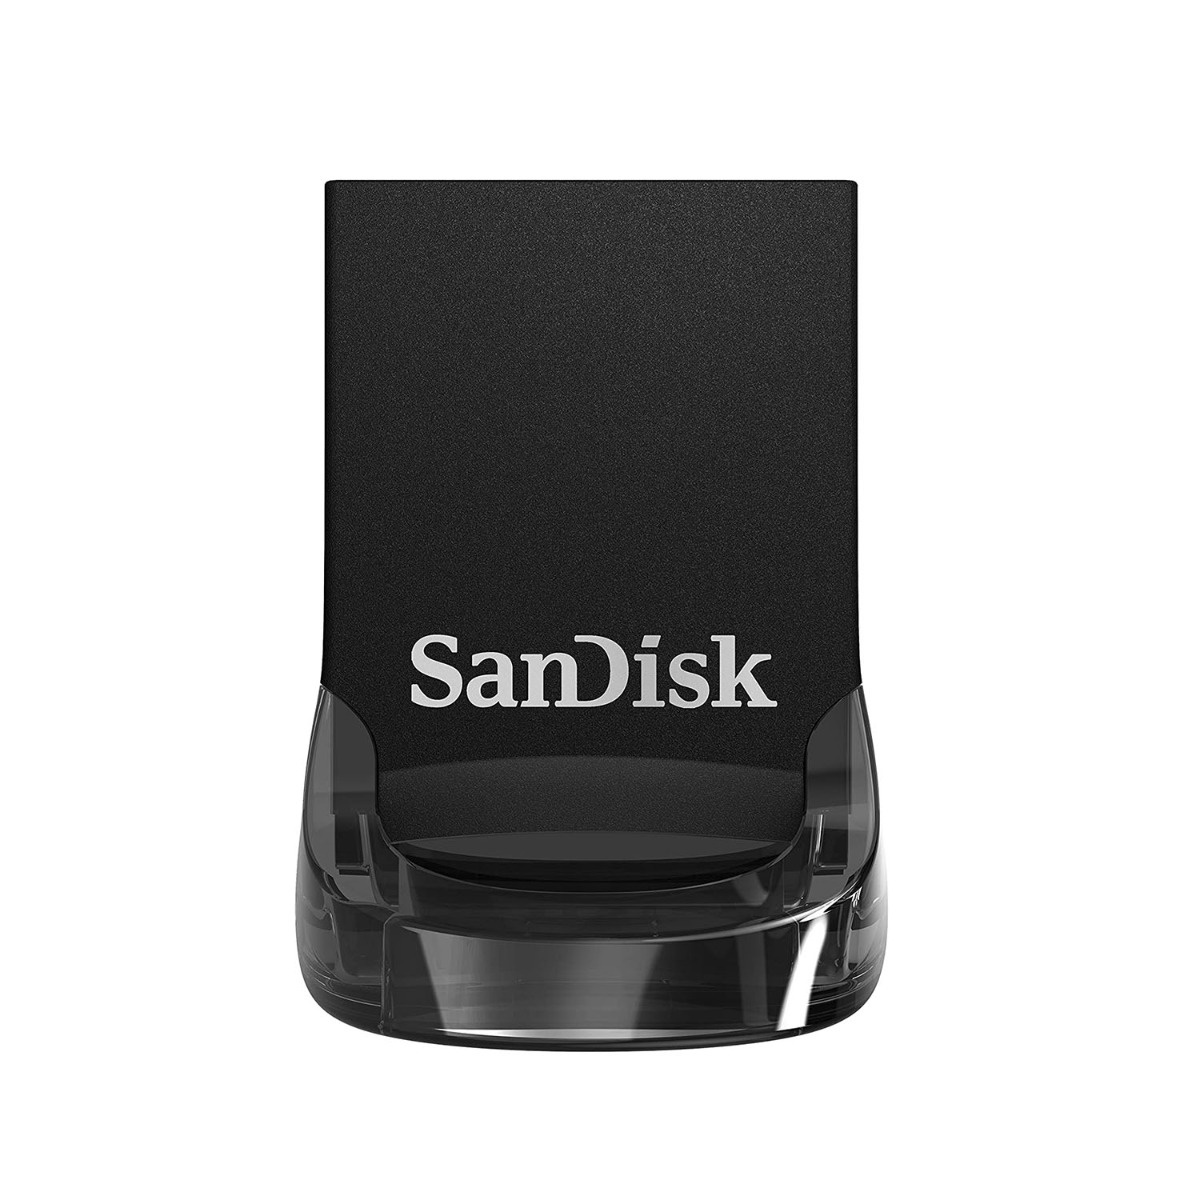 SanDisk 64GB Ultra Fit USB 3.1 Flash Drive, USB 3.1, Speed Up to 130 mb/s